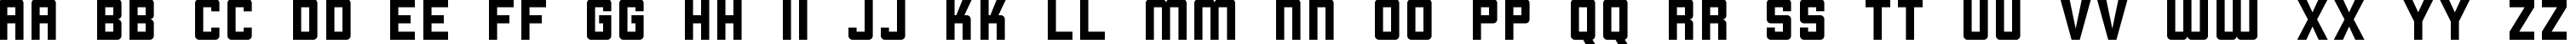 Пример написания английского алфавита шрифтом Cornerstone